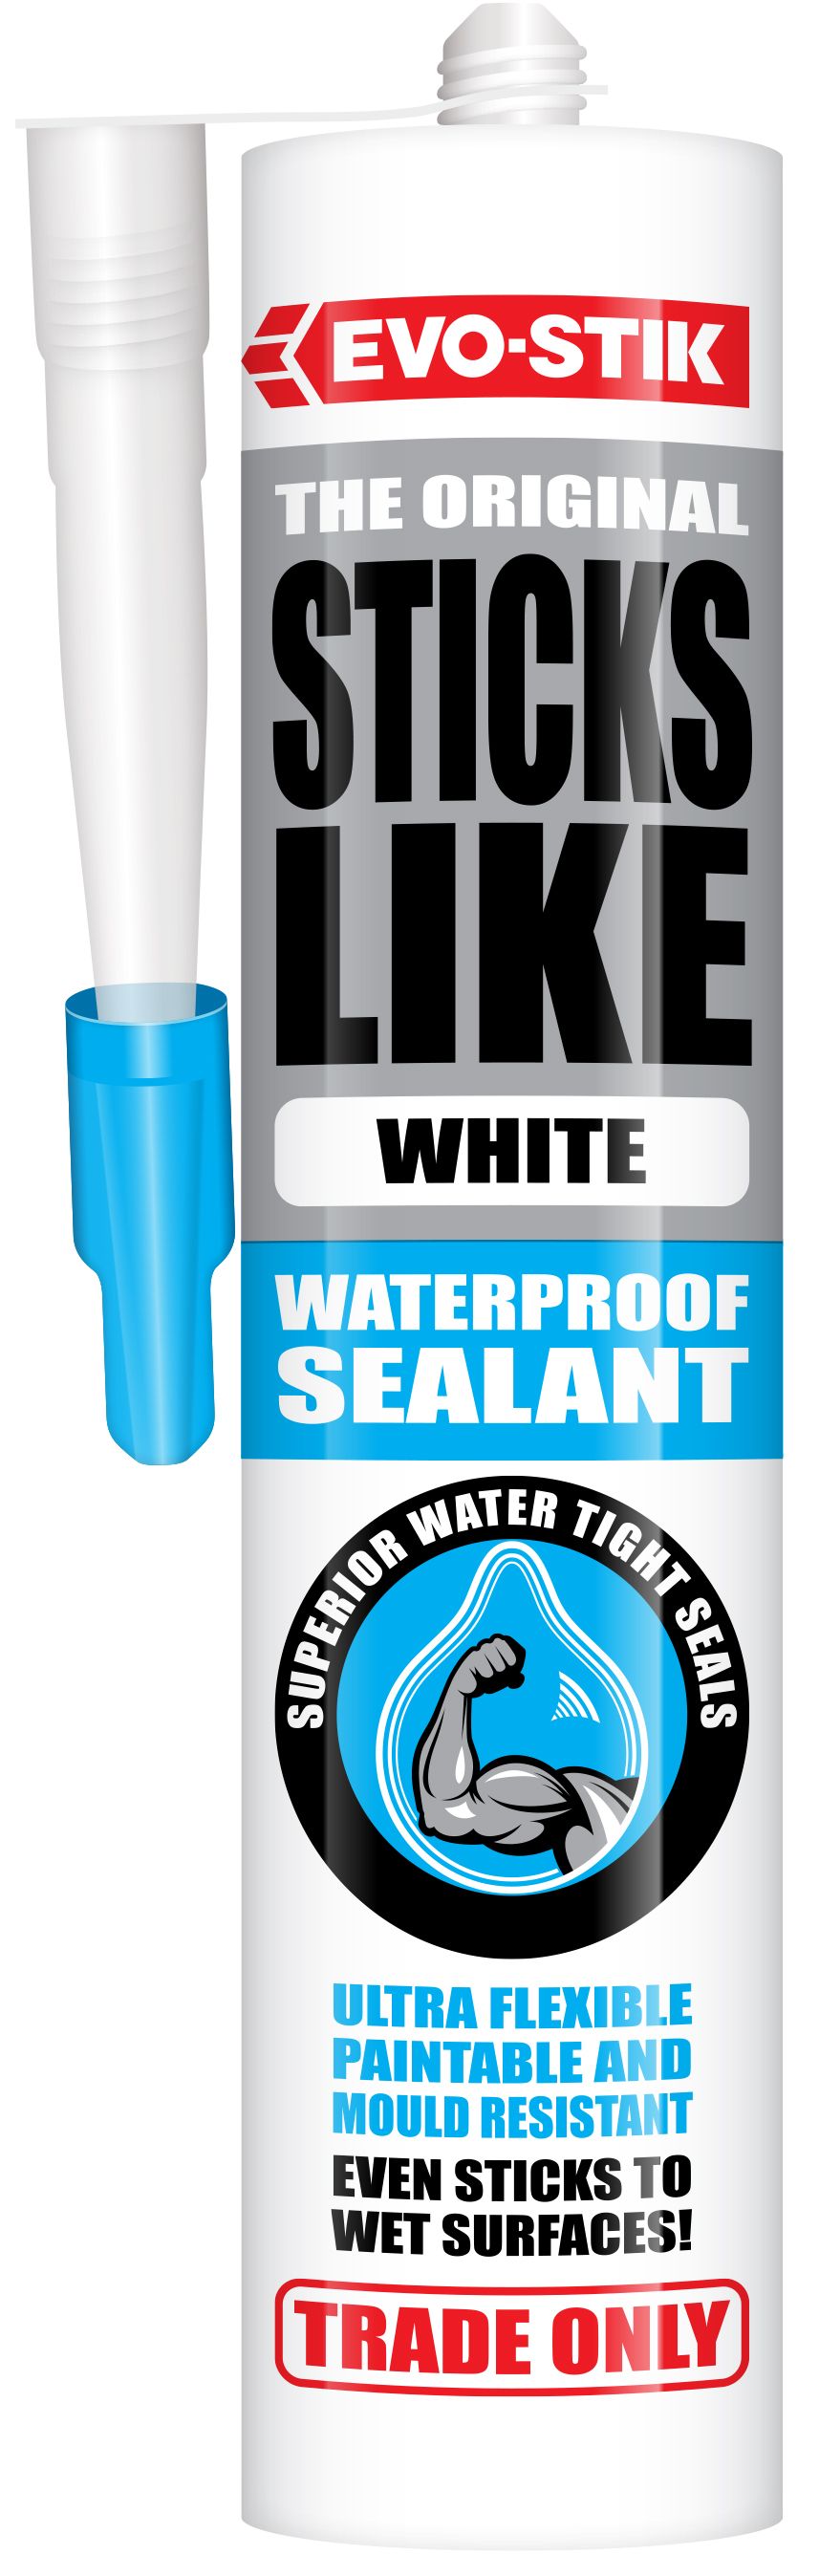 Evo-Stik Sticks Like Waterproof White Sealant - 290ml